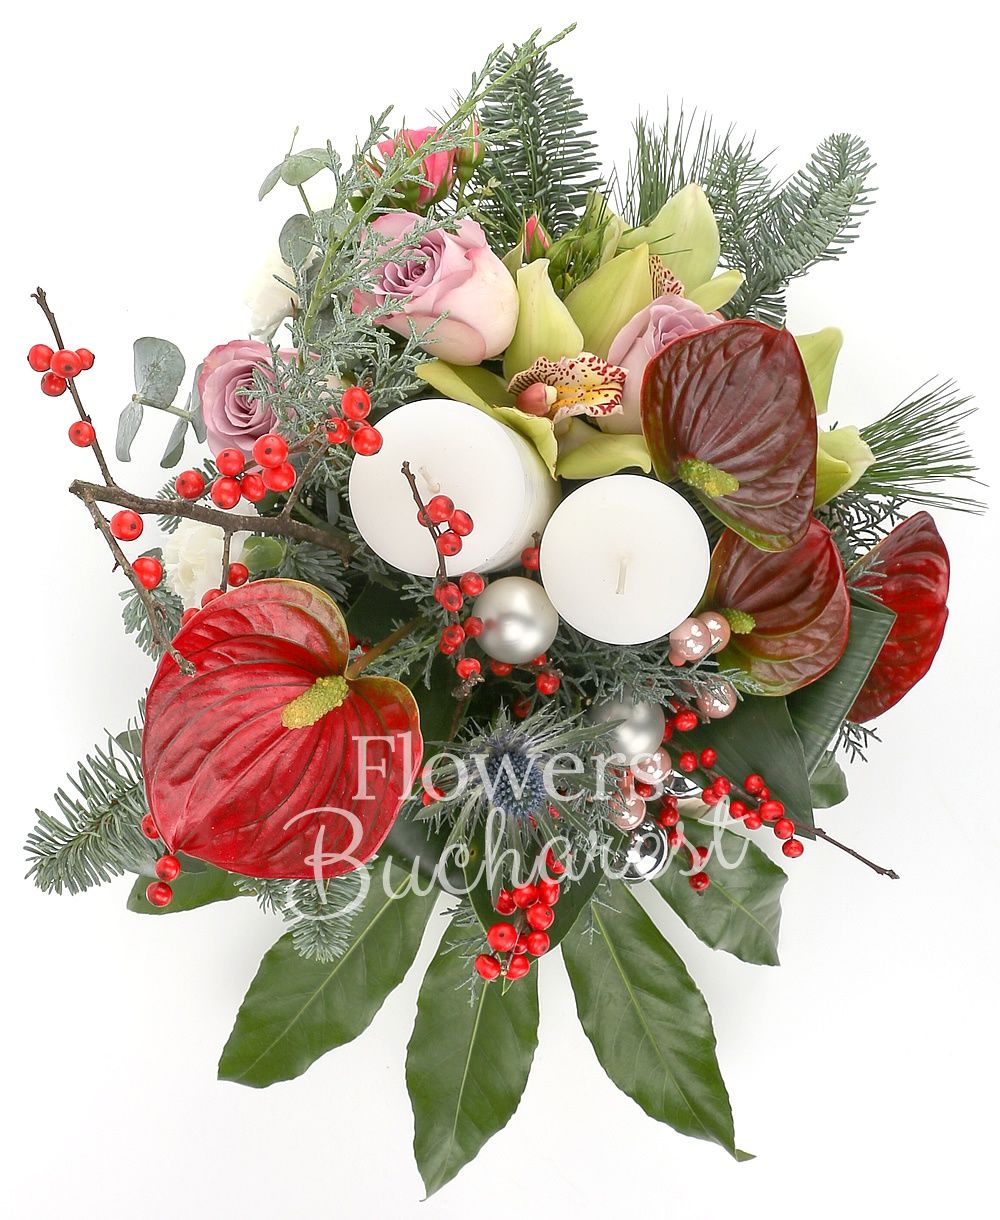 4 anthurium, 3 mauve roses, 1 pink minirose, 1 green cymbidium, 1 eryngium, 1 white lisianthus, ilex, candles, globes, greenery